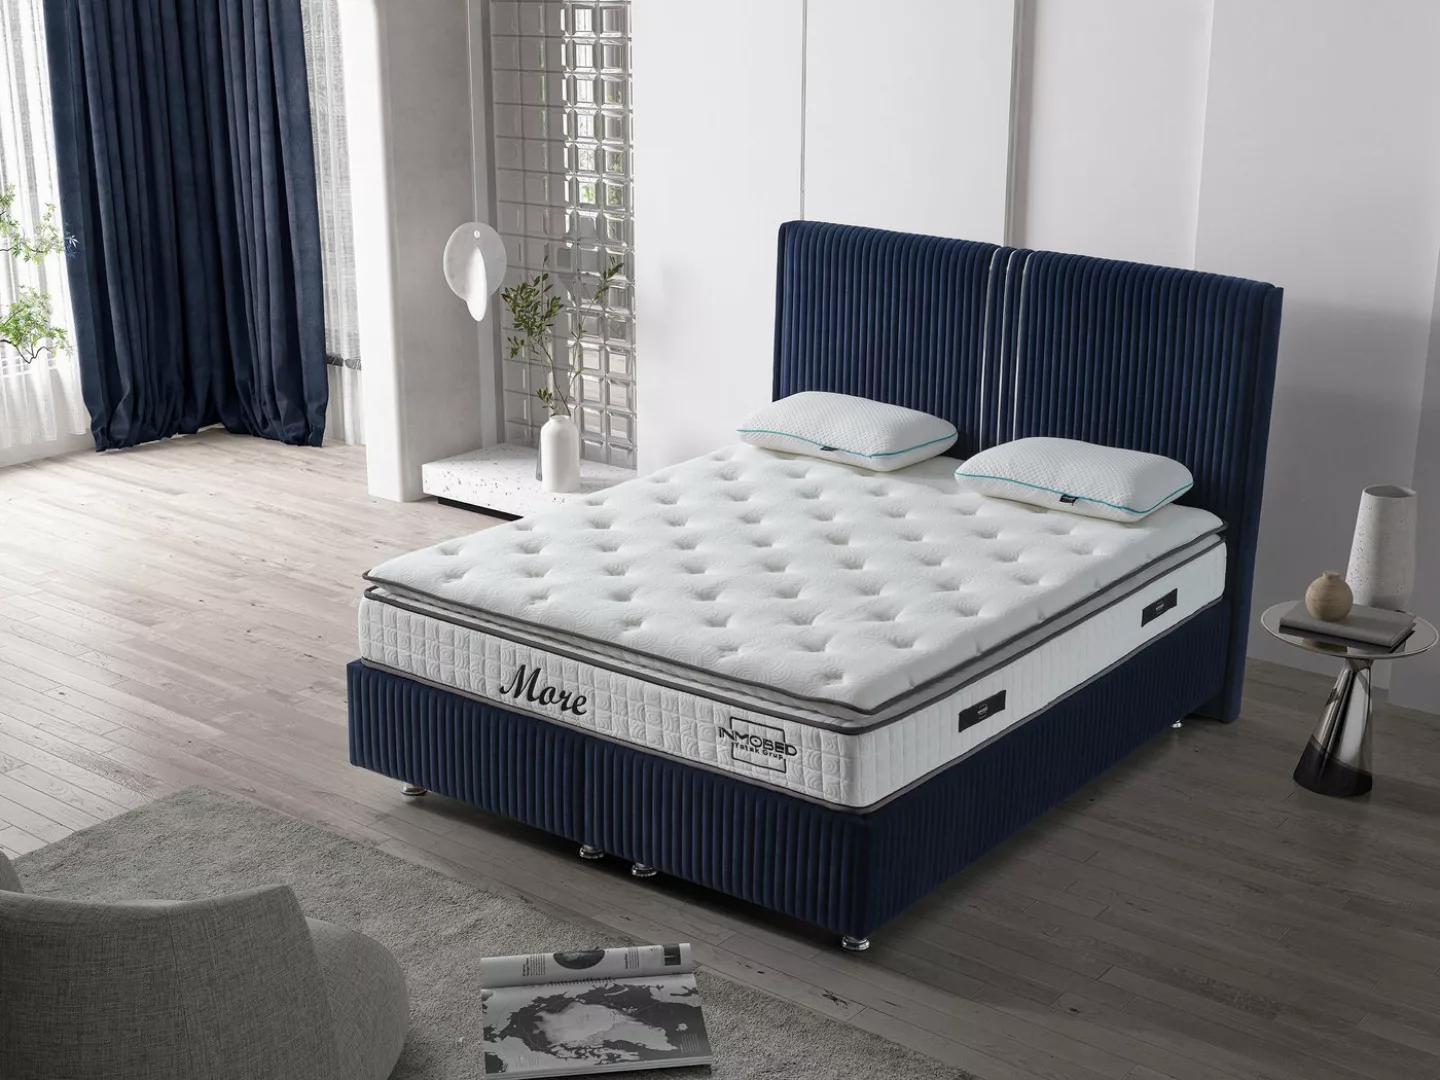 Sitheim-Europe Boxspringbett Boxspringbett Design MORE Bett inkl Matratze günstig online kaufen